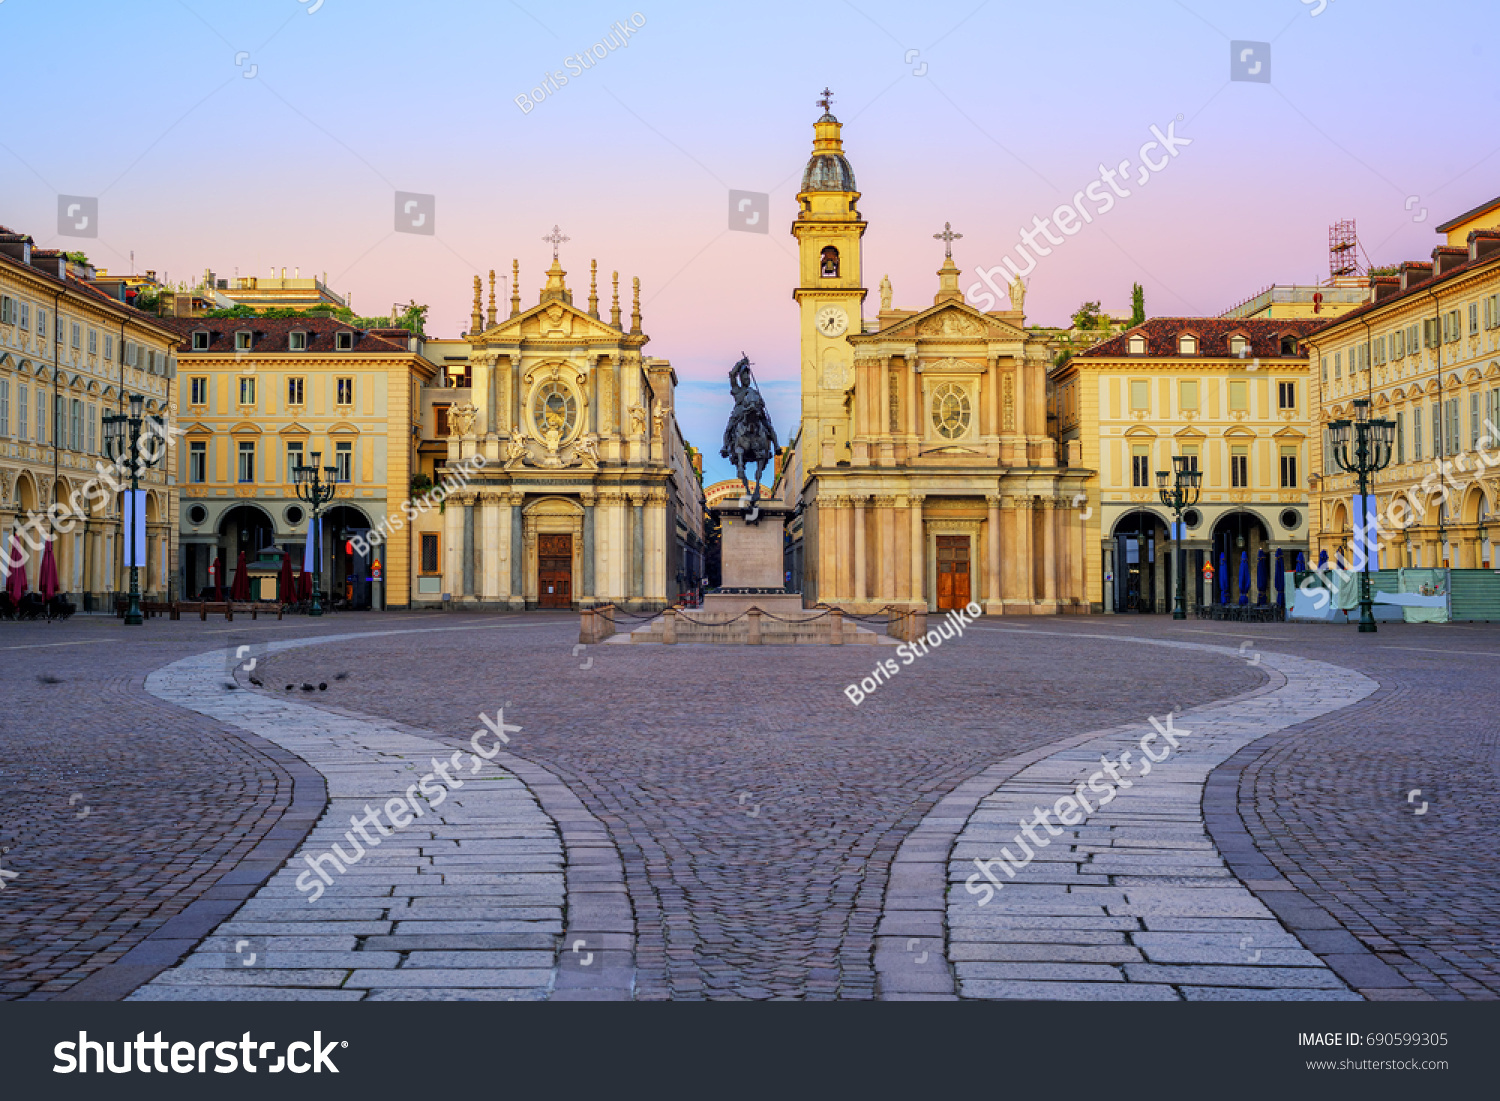 Piazza San Carlo square and twin churches of Santa Cristina and San Carlo Borromeo in the Old Town center of Turin, Italy, on sunrise #690599305